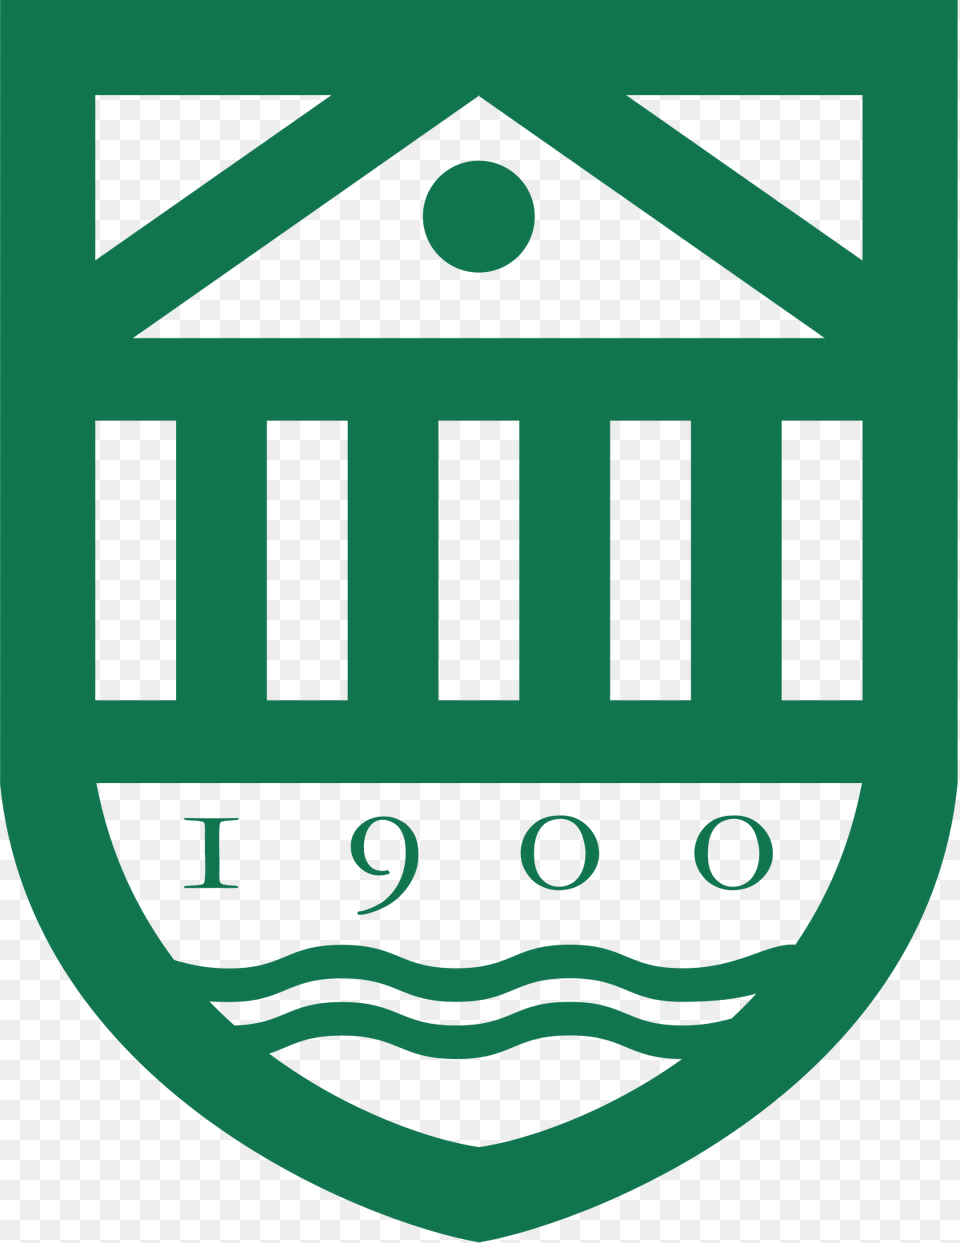 Tuck School Of Business At Dartmouth Logo, Badge, Symbol, Scoreboard, Emblem Png Image